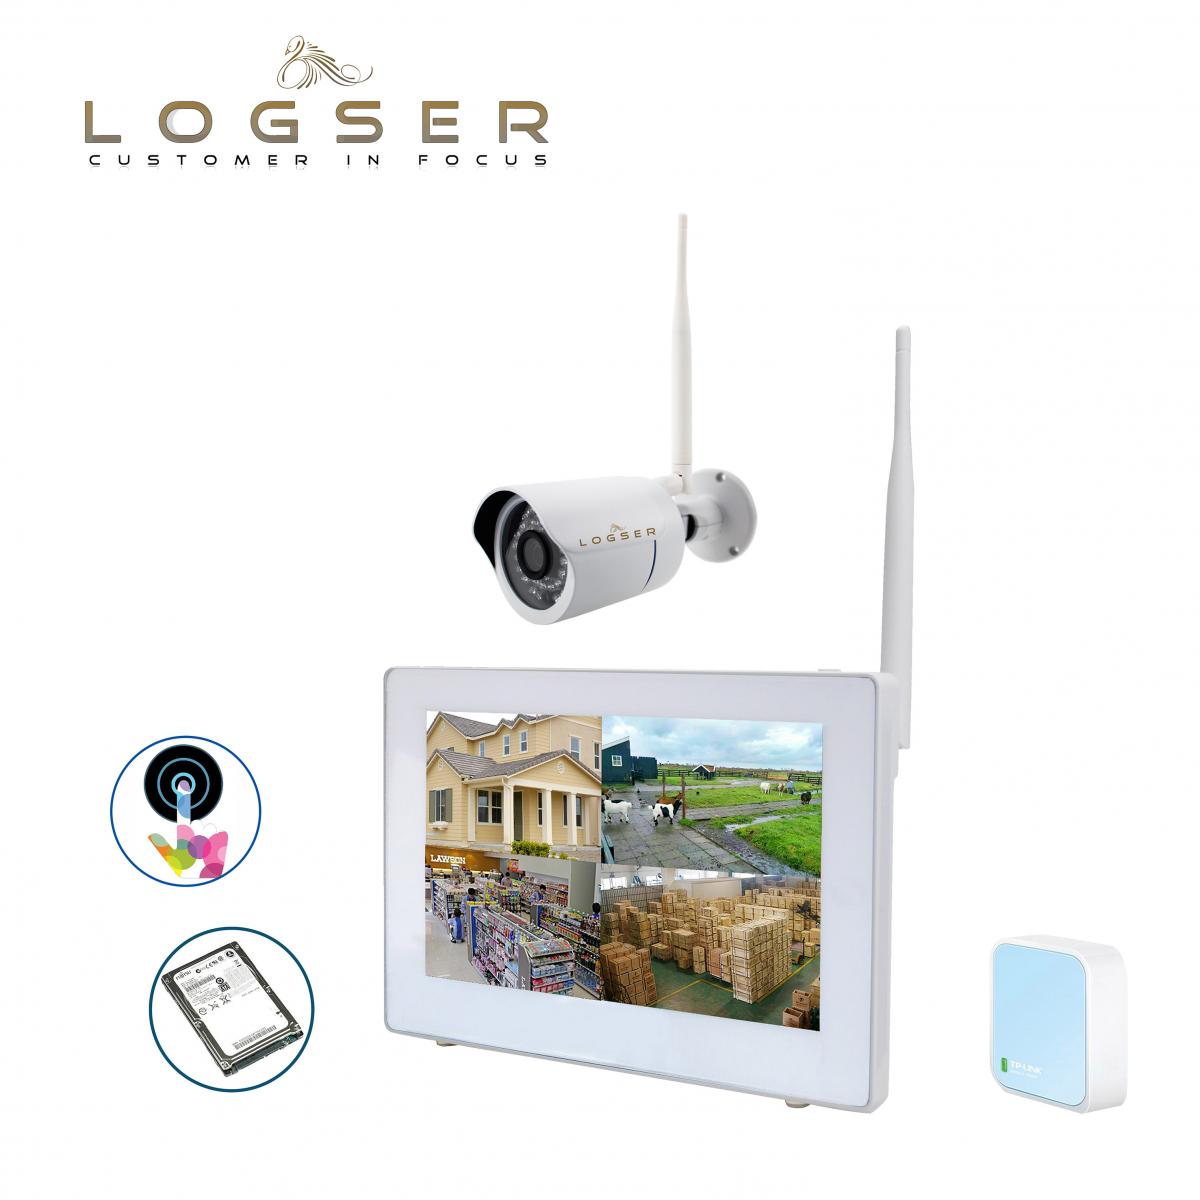 LOGSER AG - 9 Zoll Full-Touch inkl. Wifi Adapter, Funk Videoüberwachung HD 720p Echtzeit, 500GB SATA Festplatte, 1x Nachtsicht Kamera     